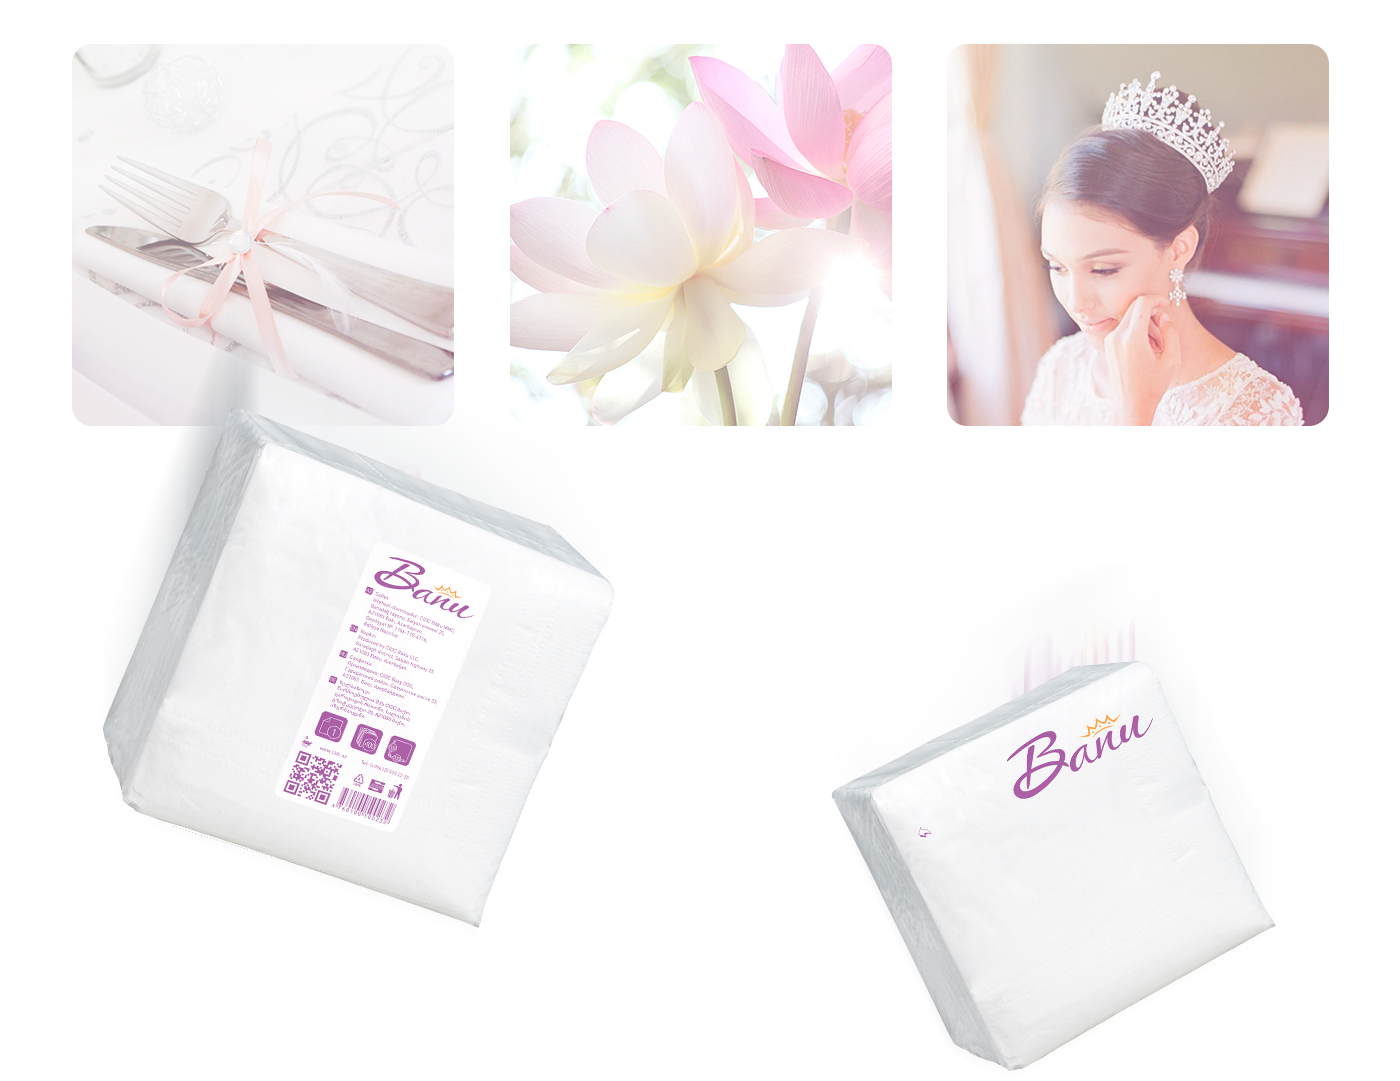 azerbaijan banu royal napkin femininity FMCG logo Packaging